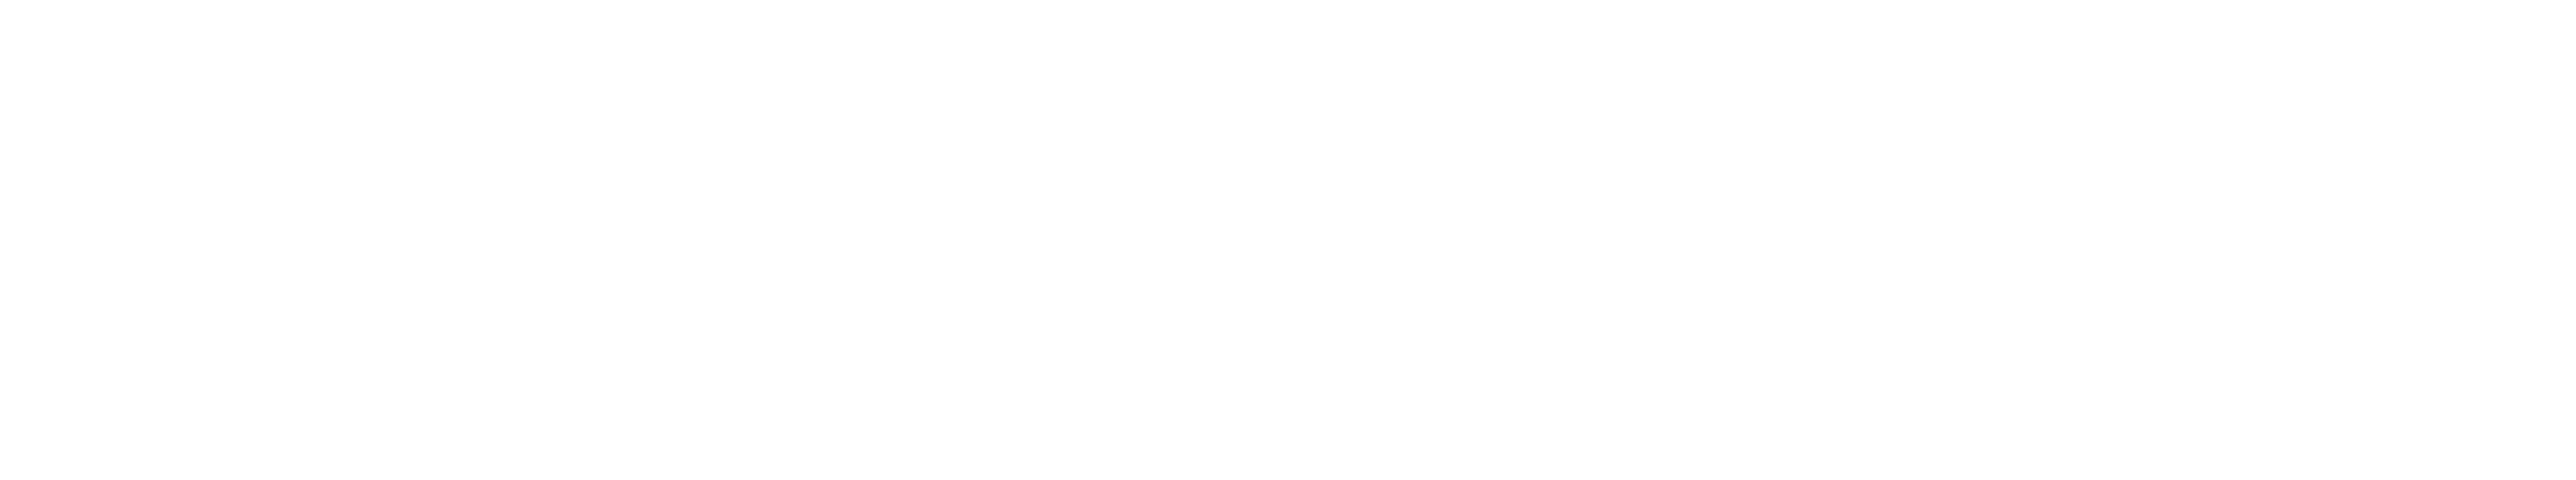 Platform Group Logo